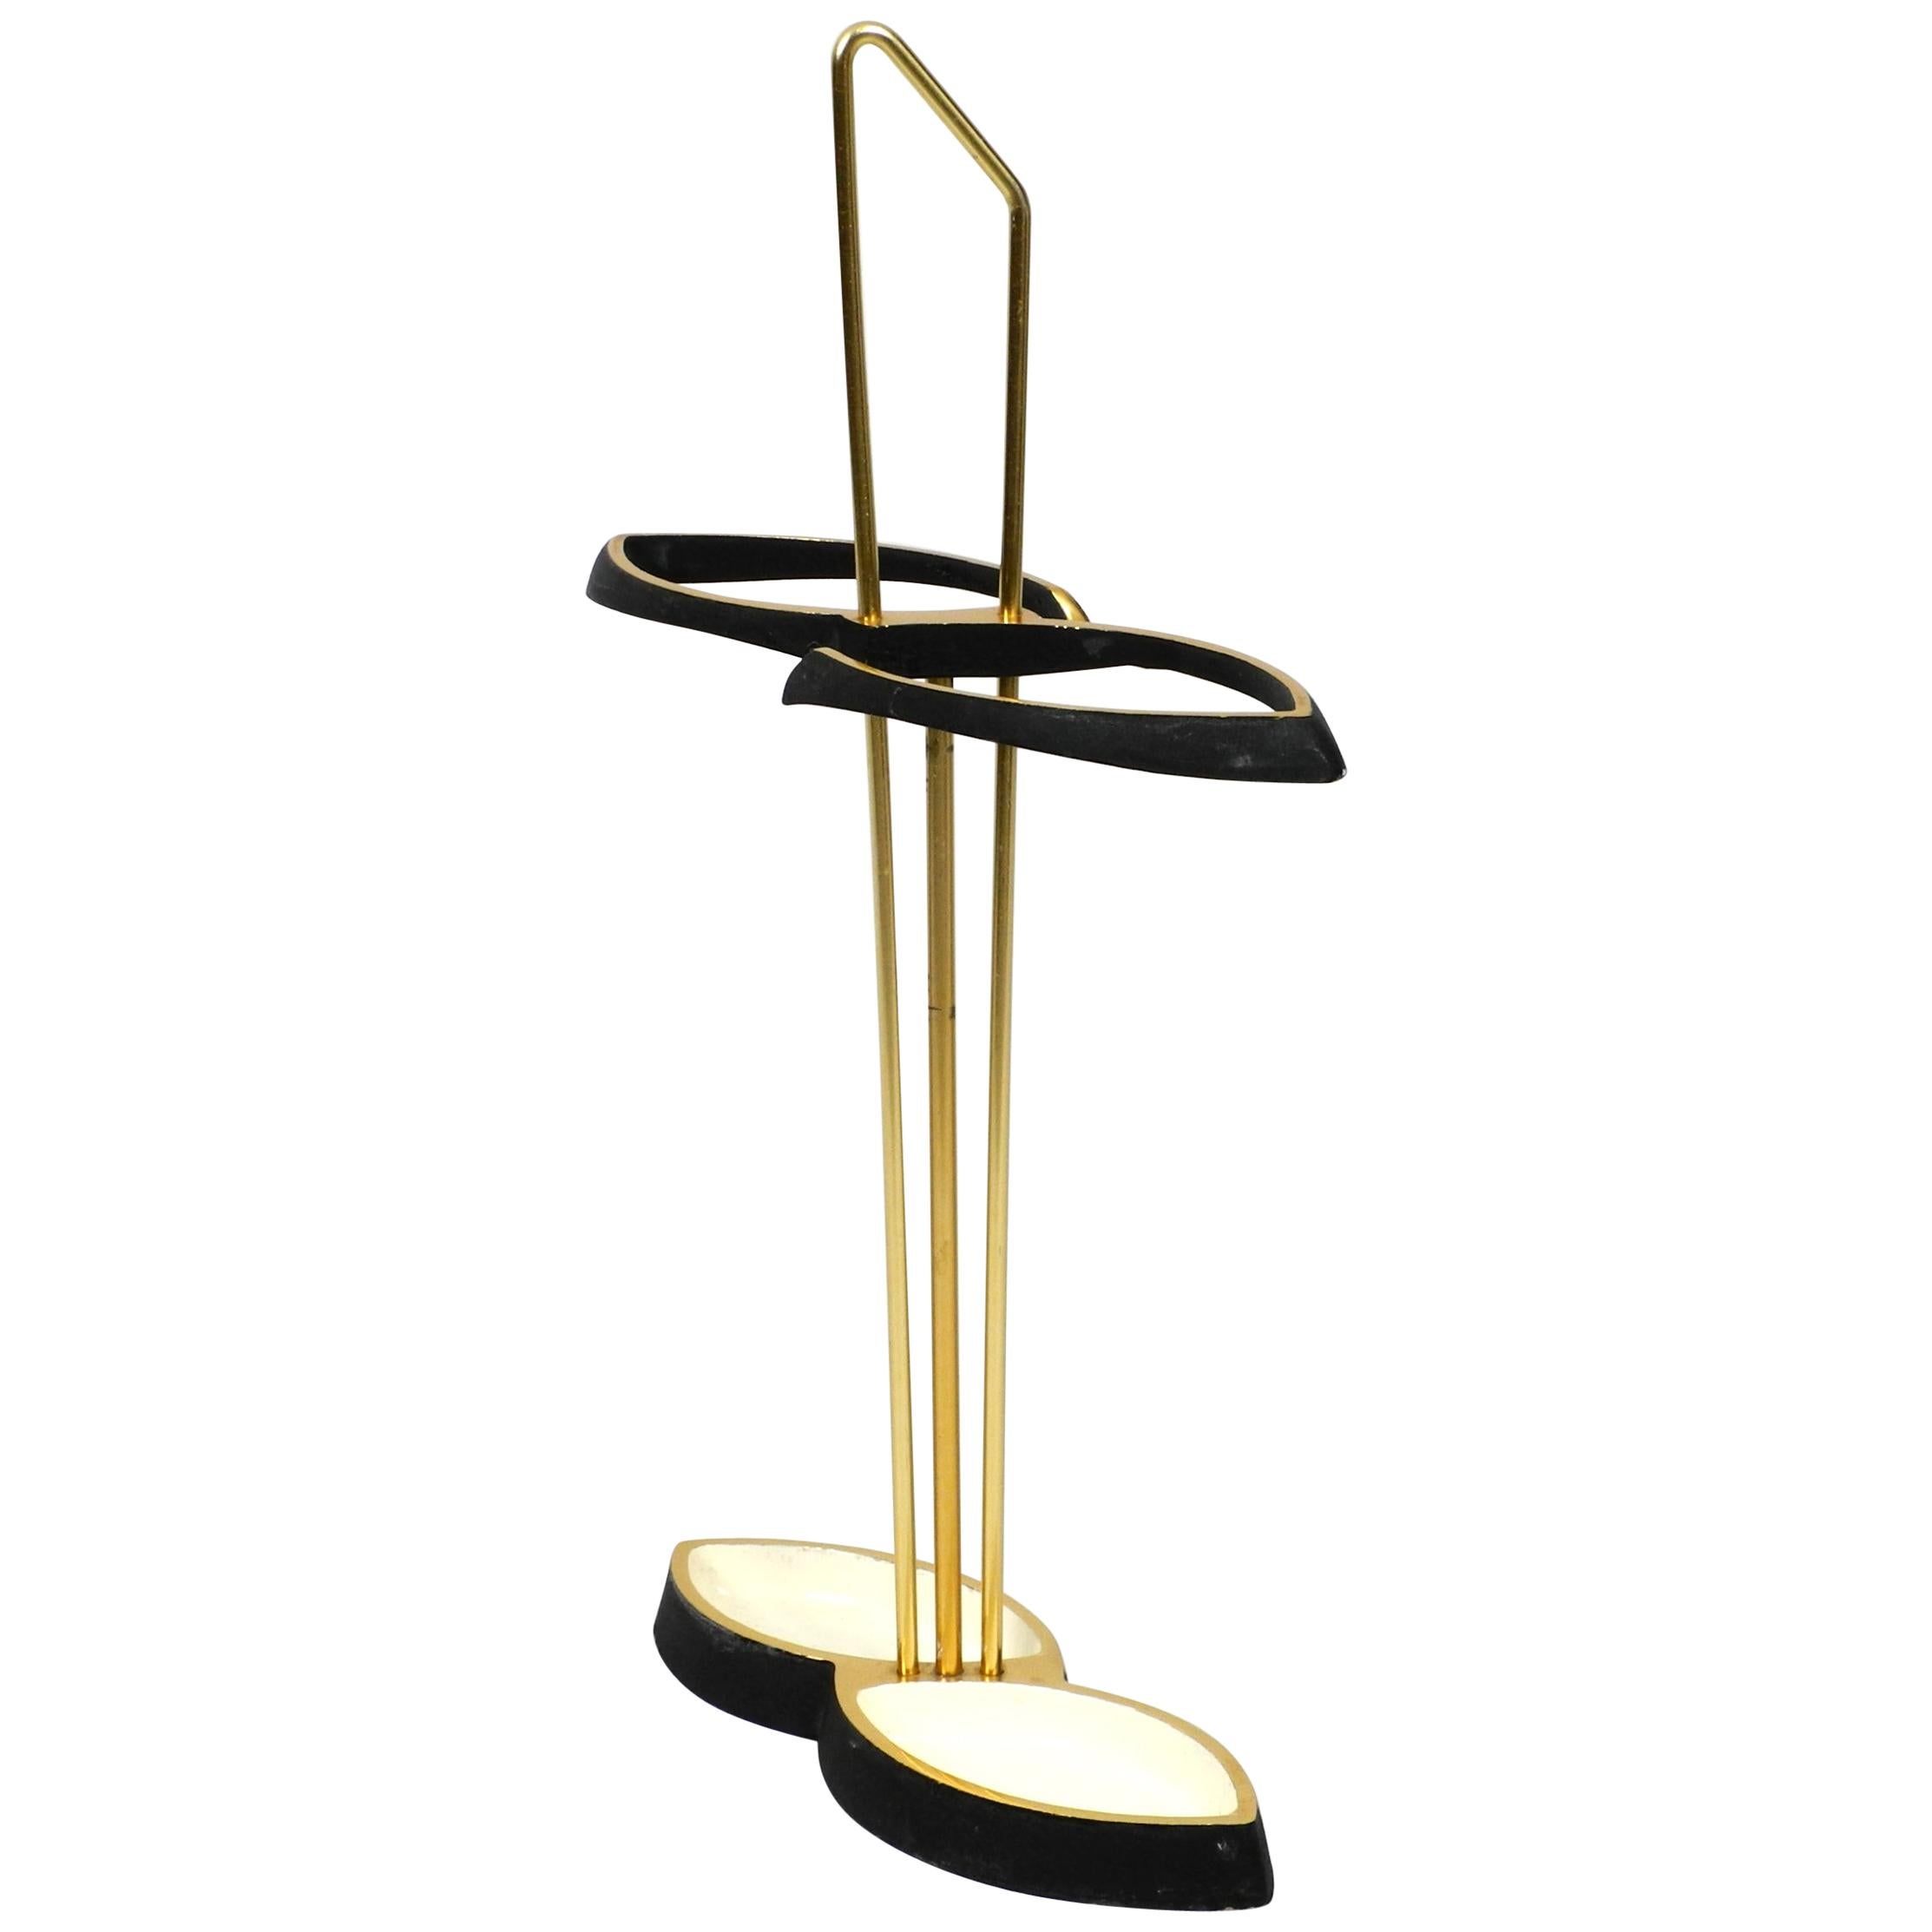 Very Unusual Mid-Century Modern Brass Umbrella Stand